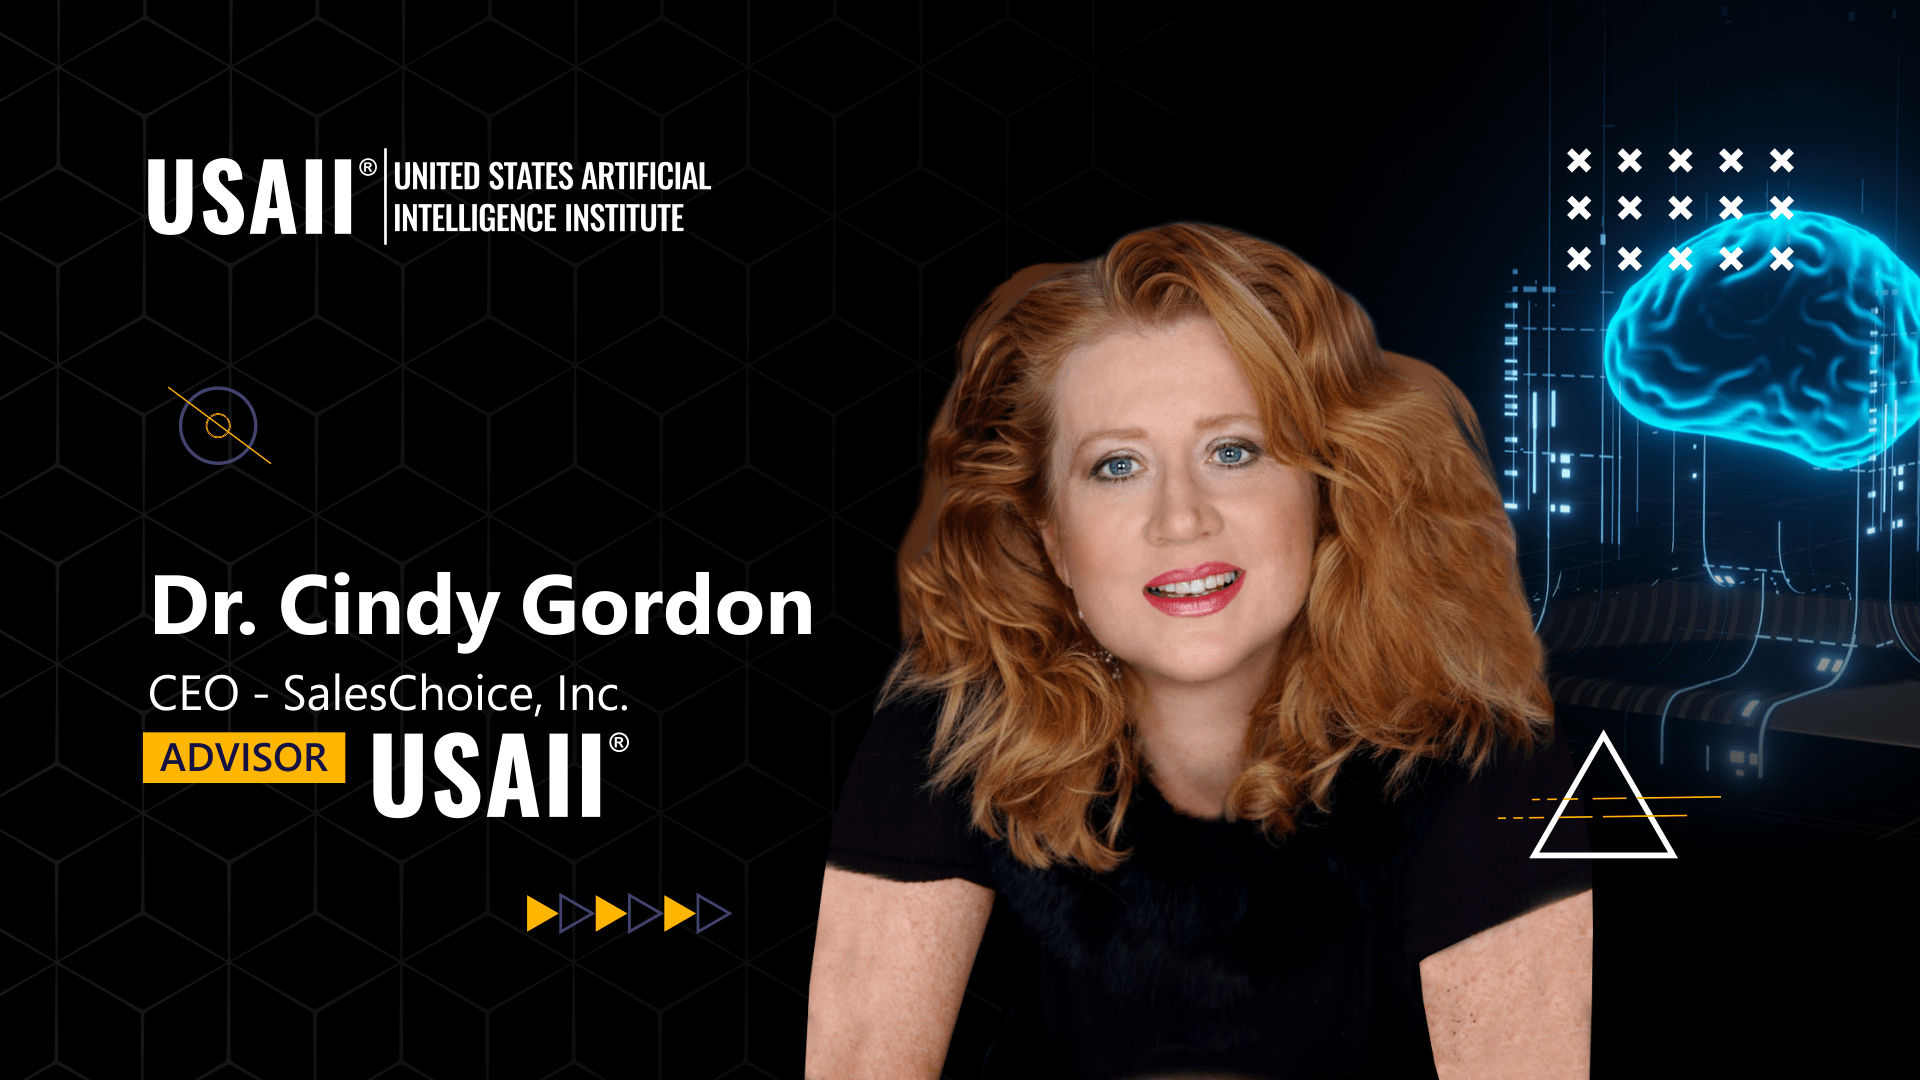 USAII® Appoints Dr. Cindy Gordon as Advisor